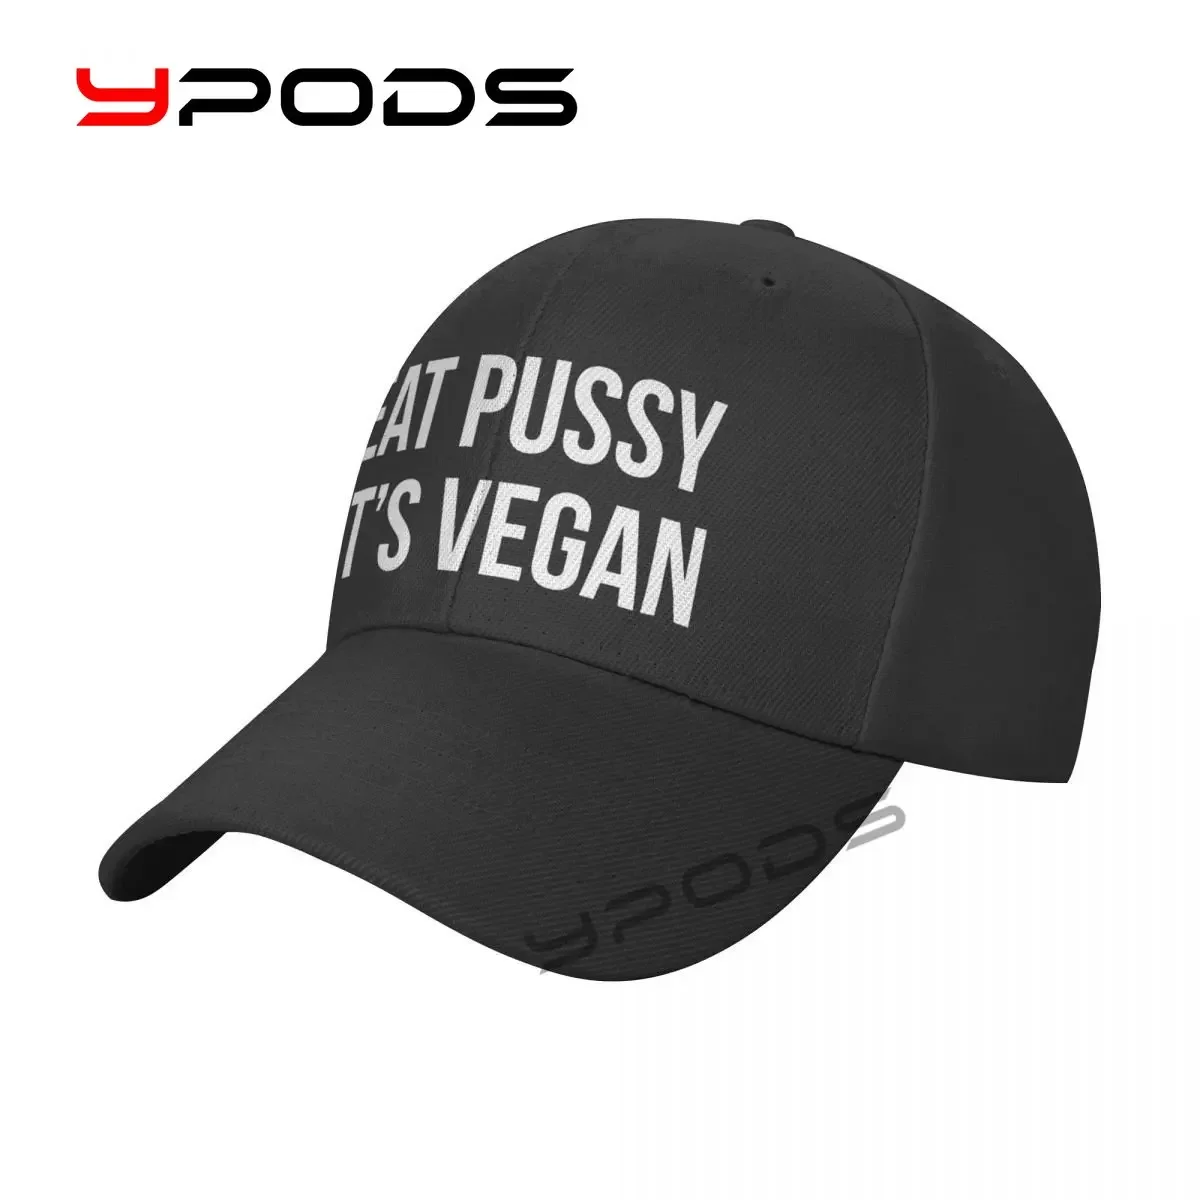 

Eat Pussy Its Vegan New Baseball Caps for Men Cap Women Hat Snapback Casual Cap Casquette hats